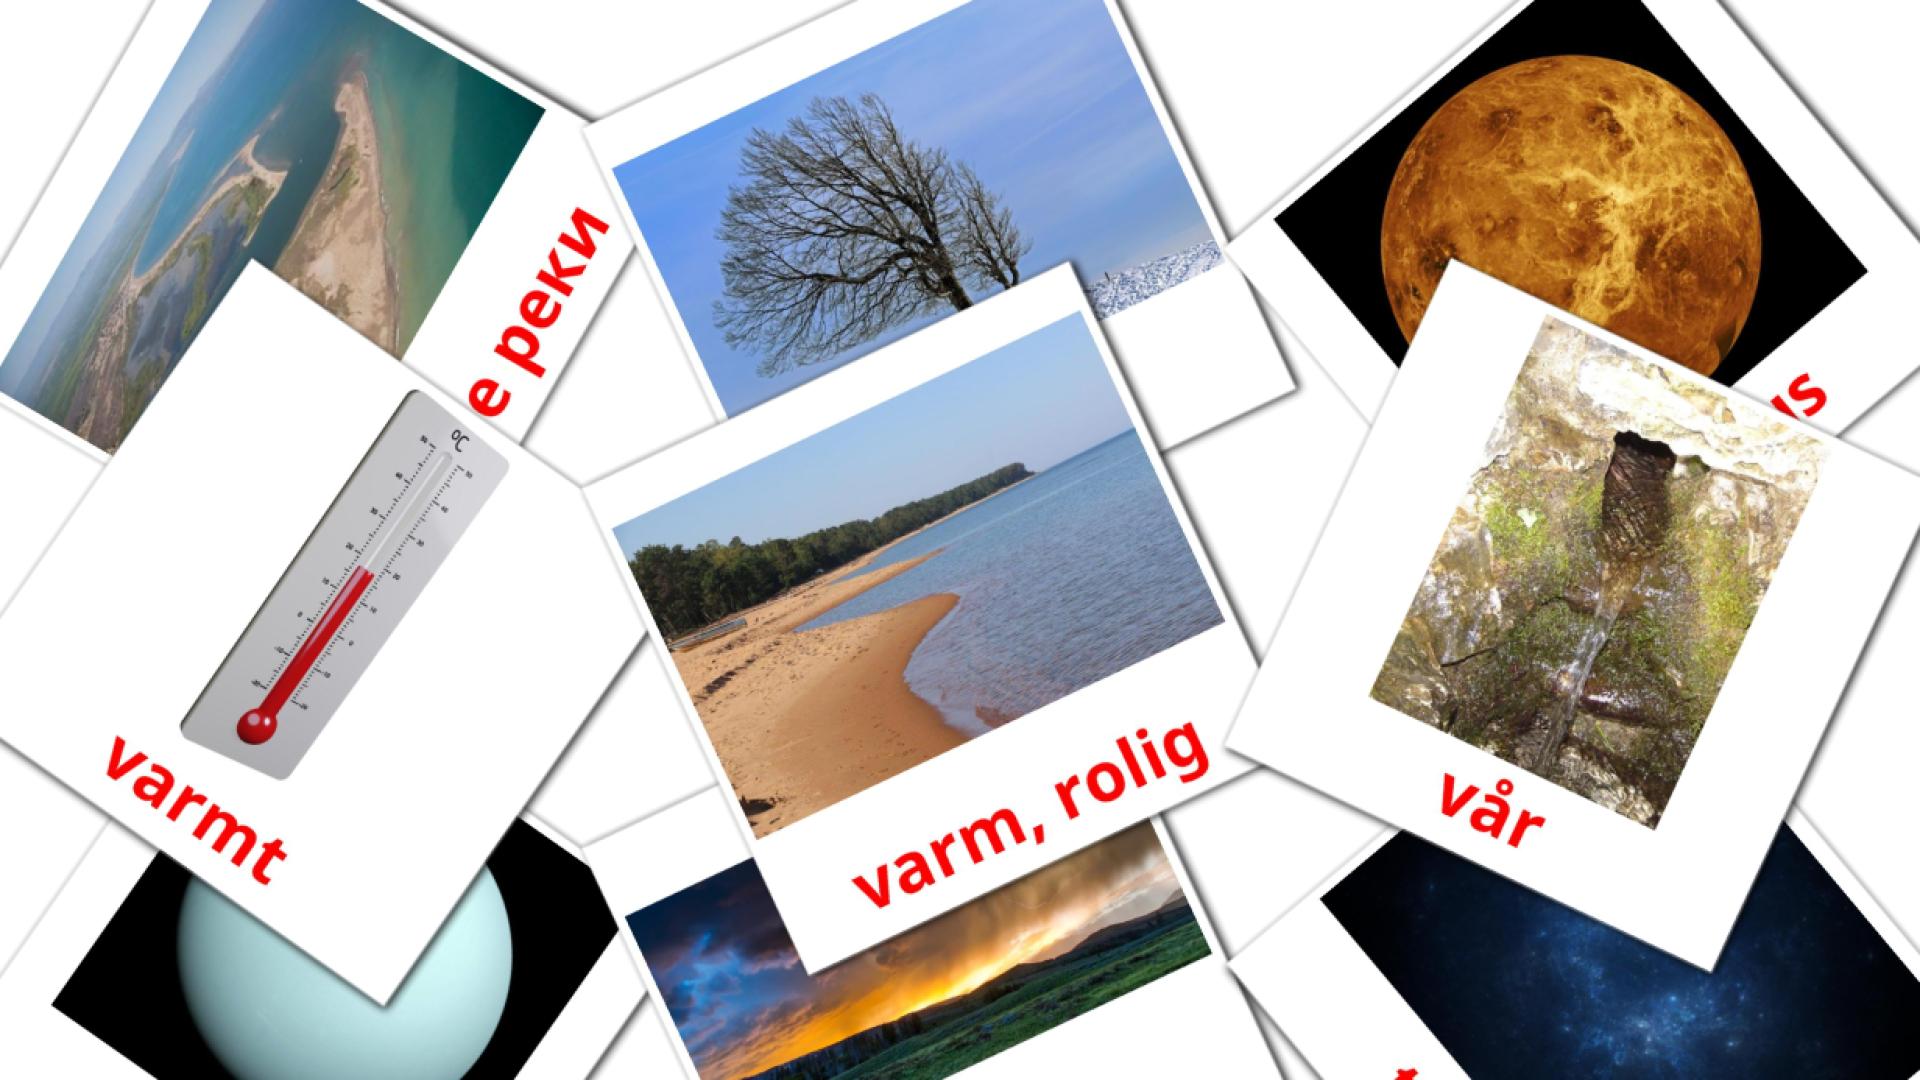 Natur norwegian vocabulary flashcards